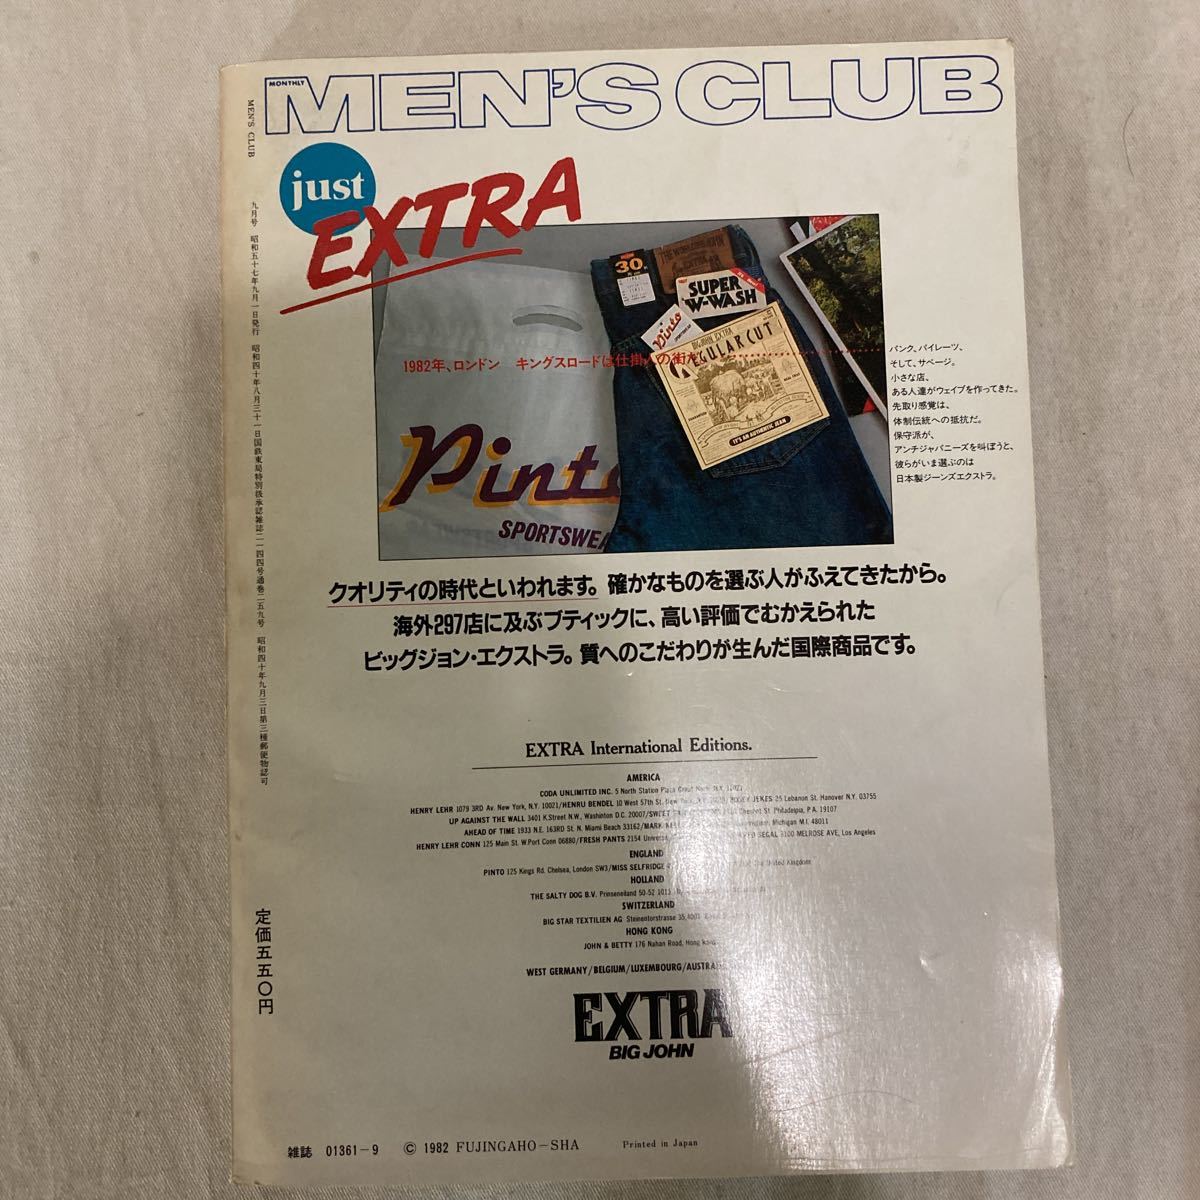 MEN\'\'S CLUB мужской Club 259 1982 год 9 месяц номер ivy традиции pre pi- Brooks Brothers Popeye голубой tasVAN